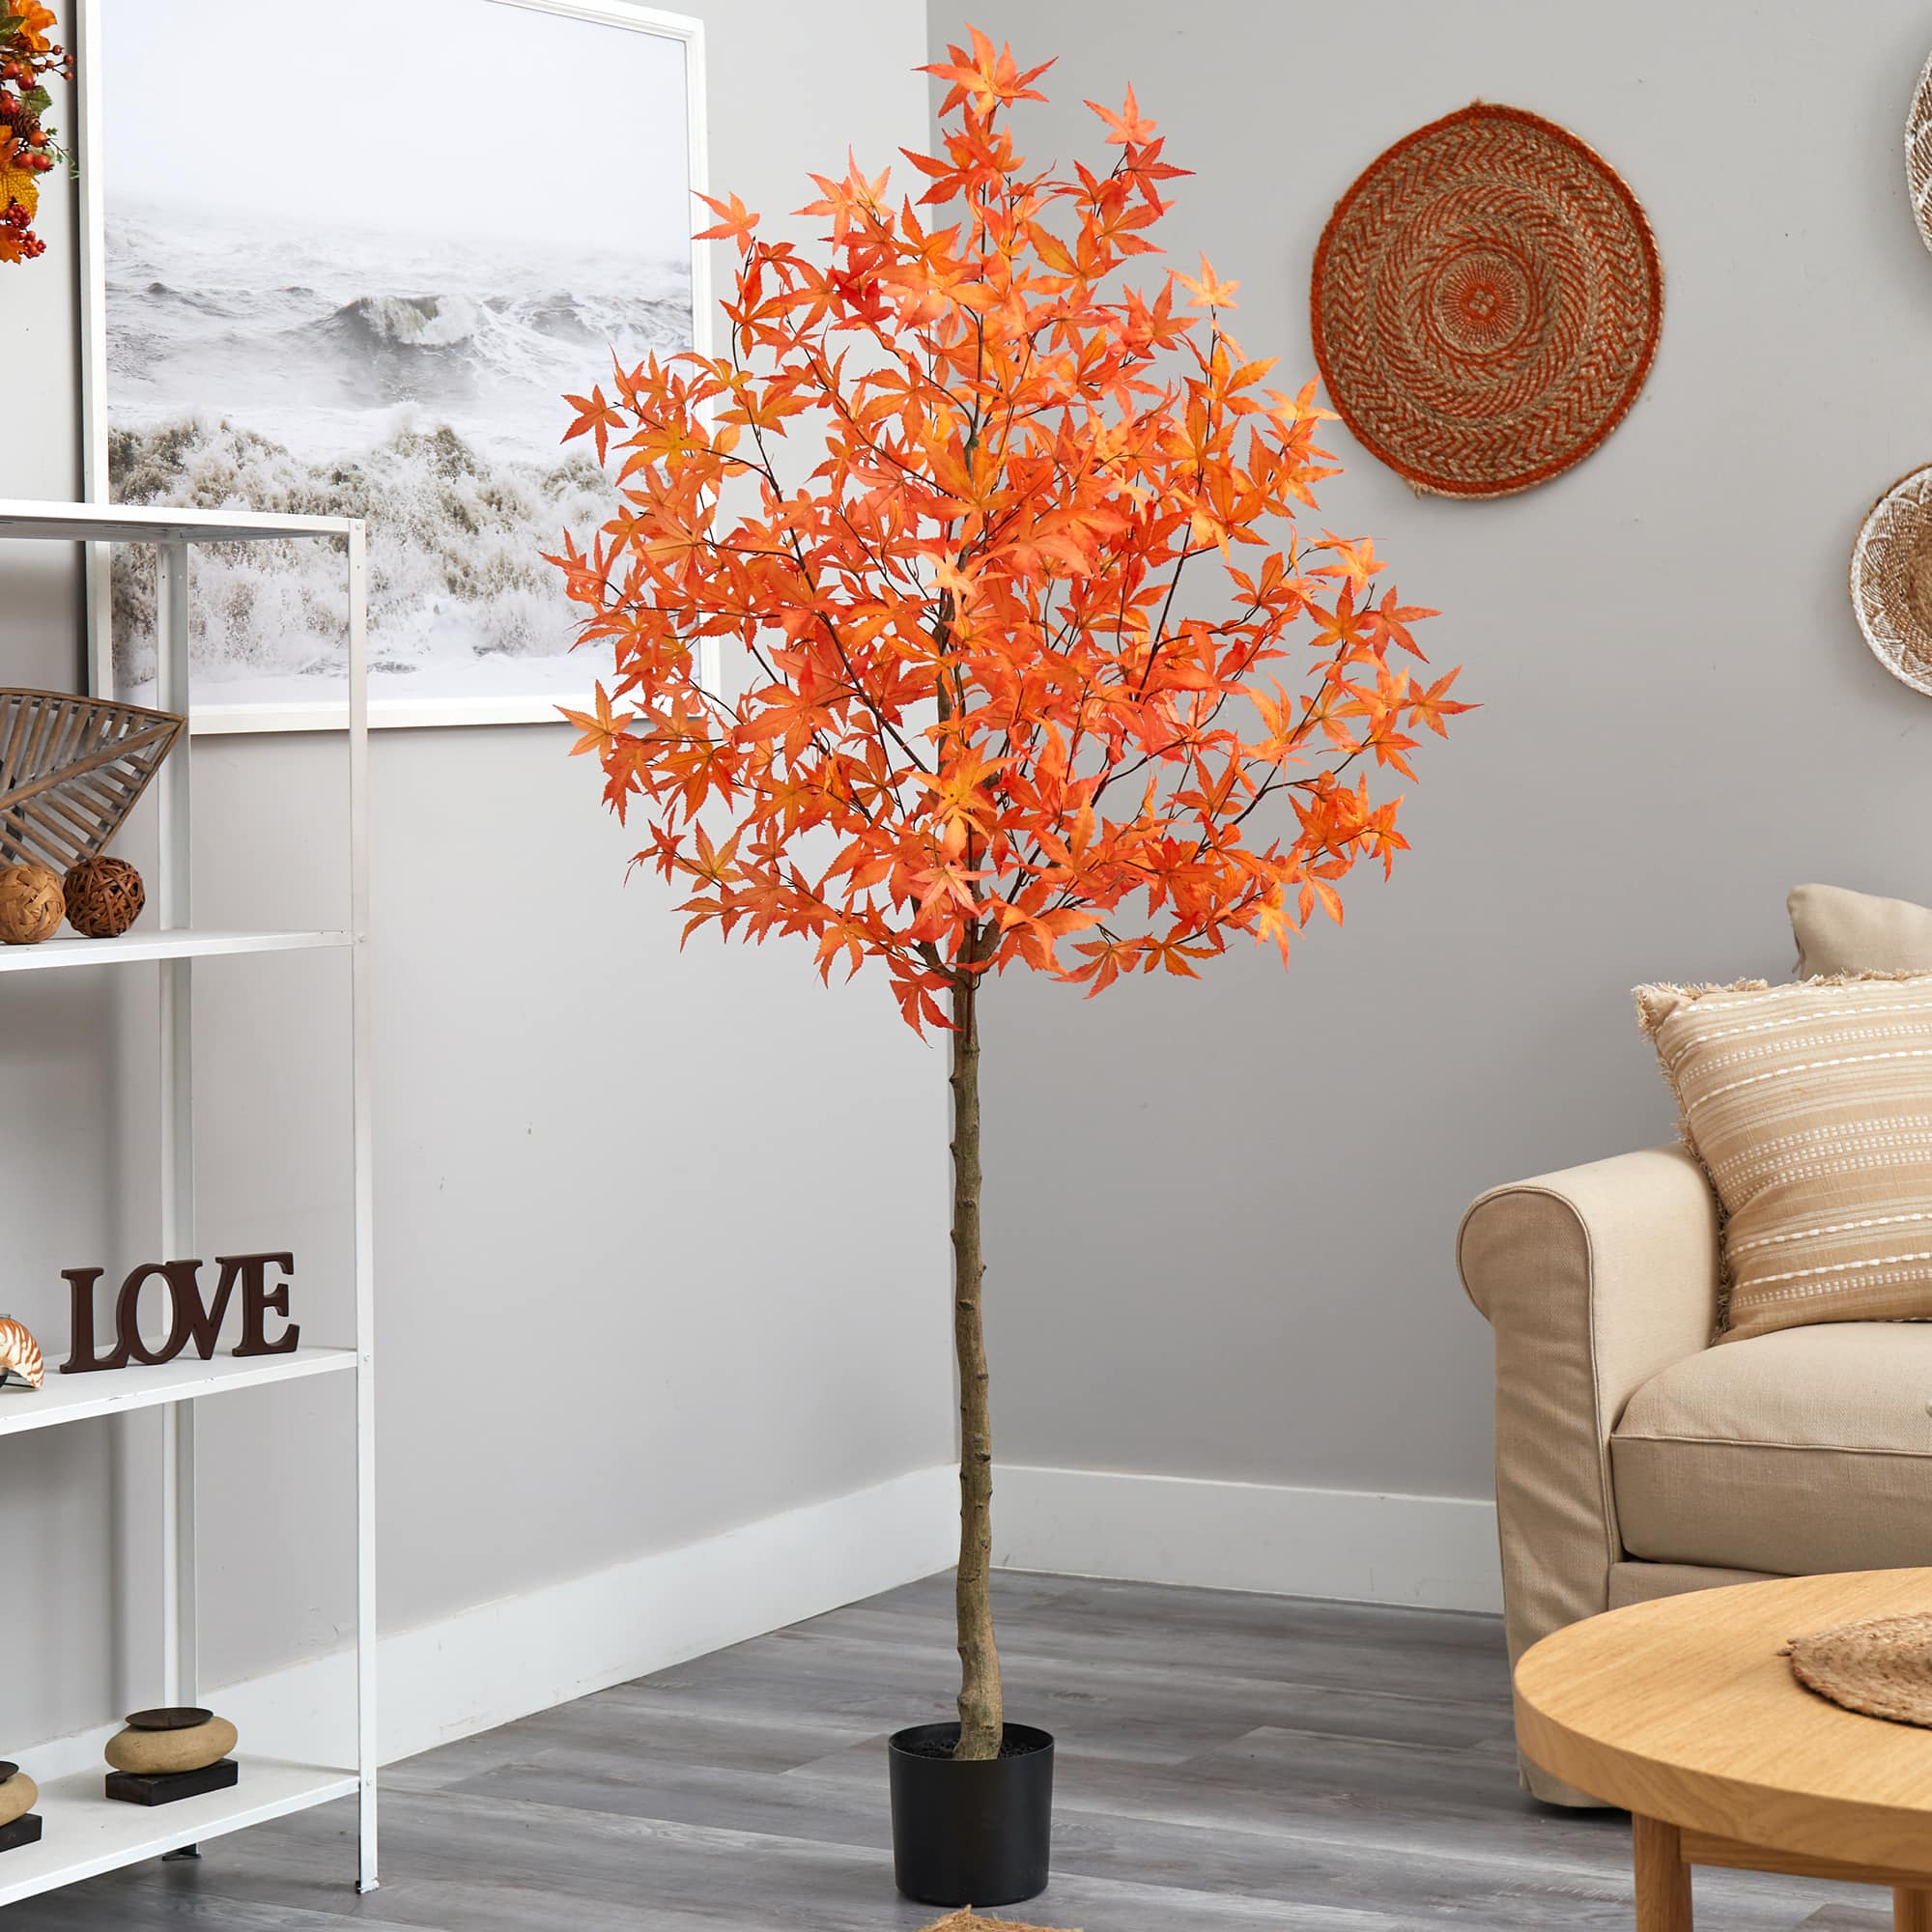 6ft. Potted Orange Autumn Maple Tree